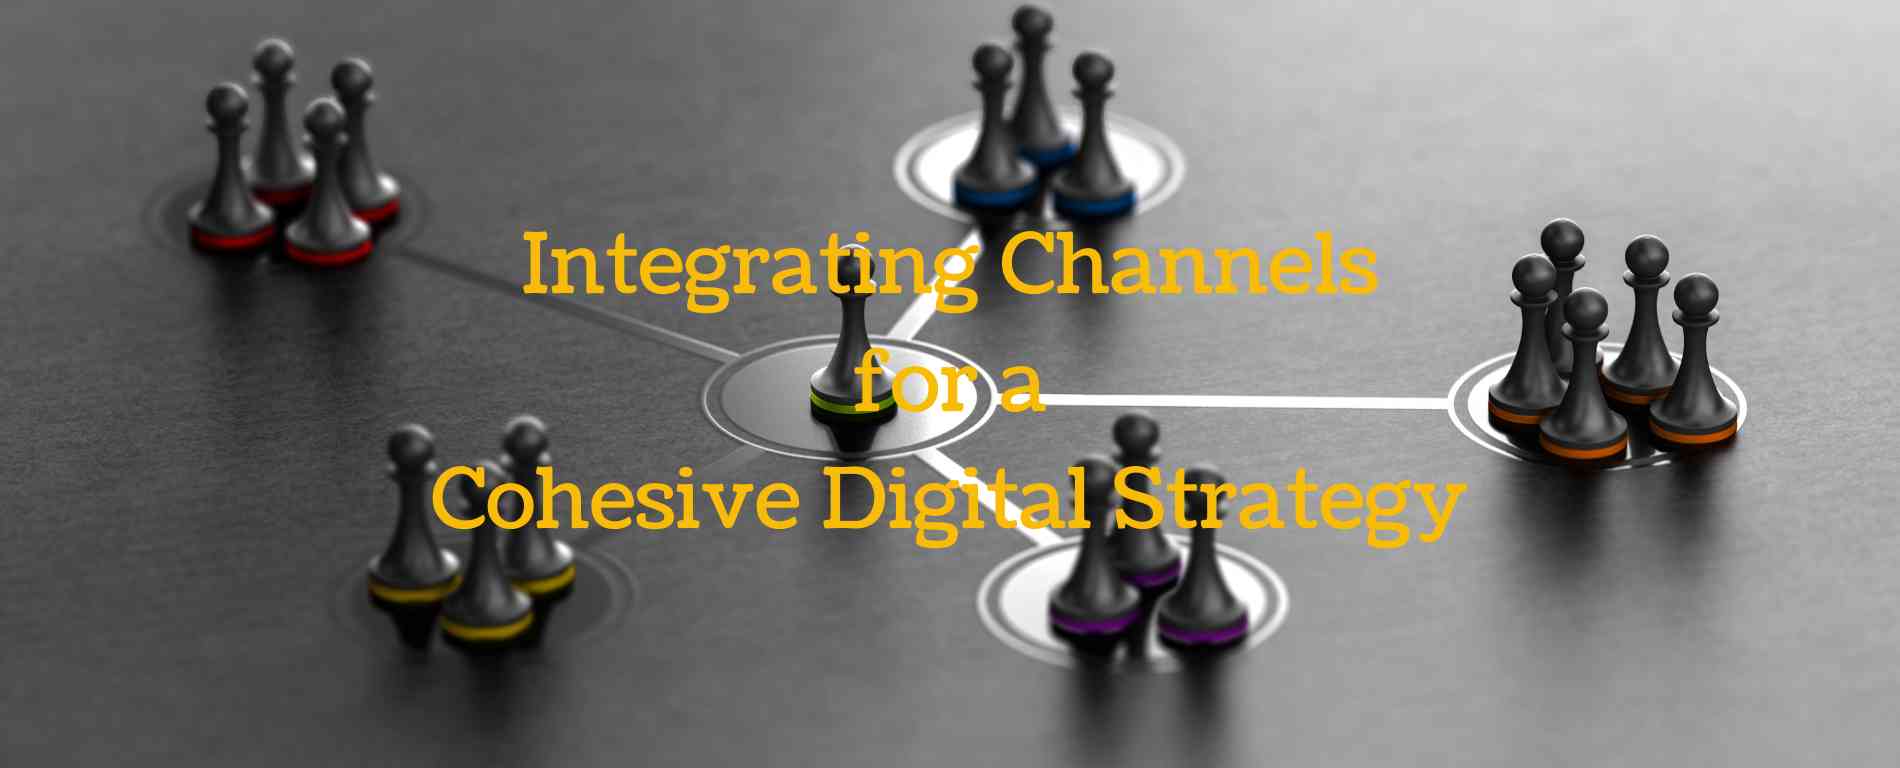 Cohesive Digital Strategy